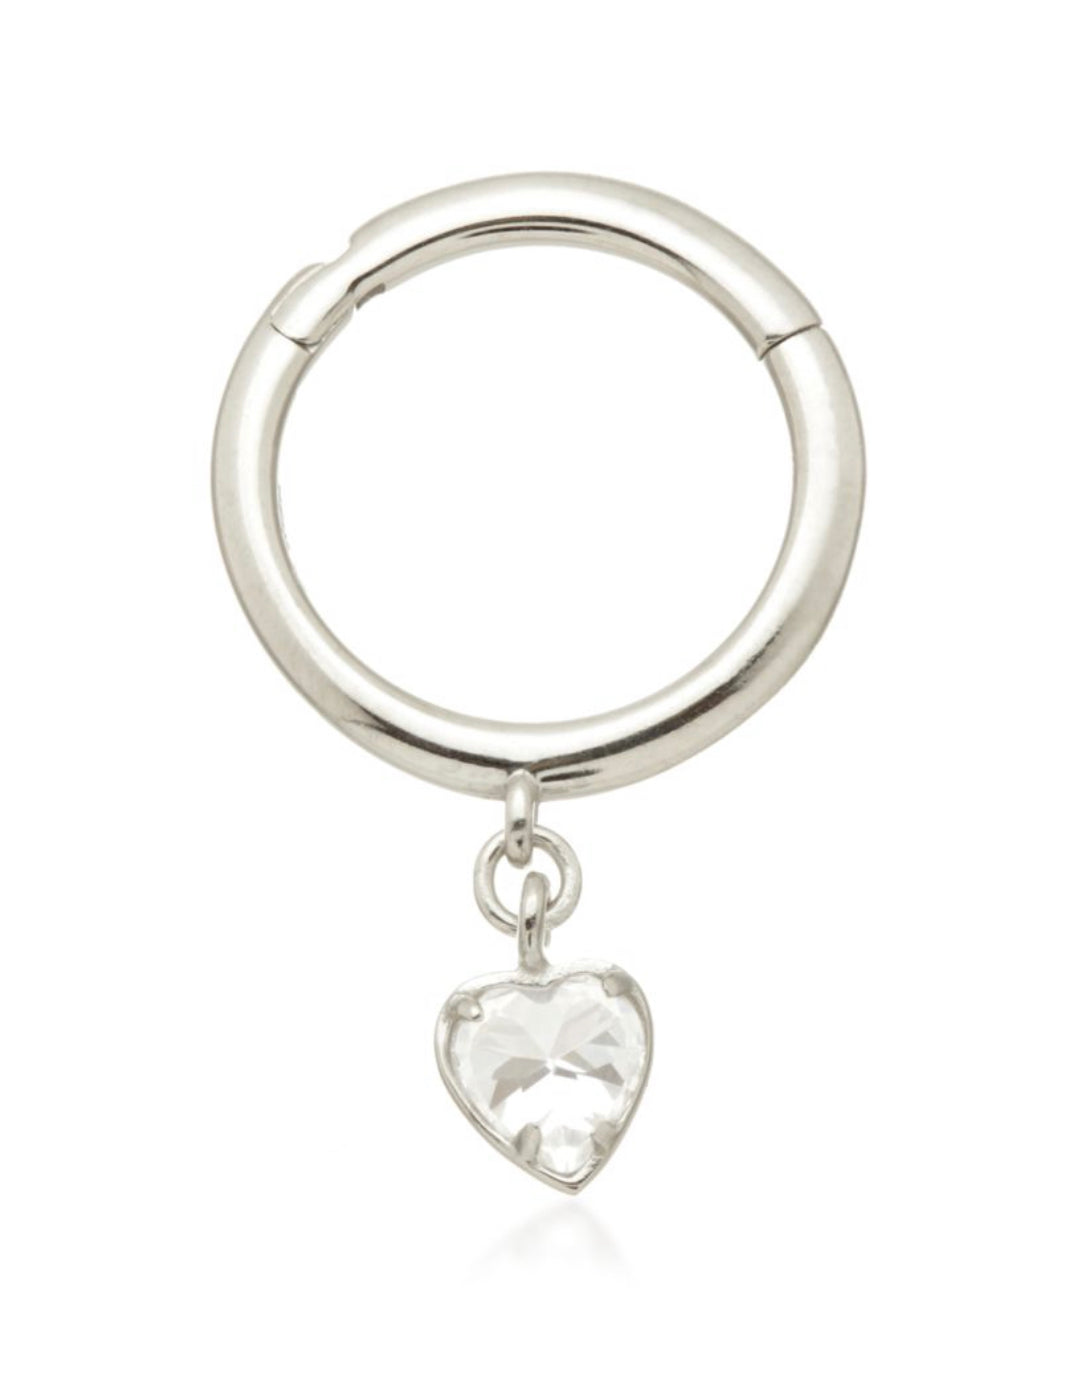 Tish Lyon Gold Heart Charm Chain Hinge Ring